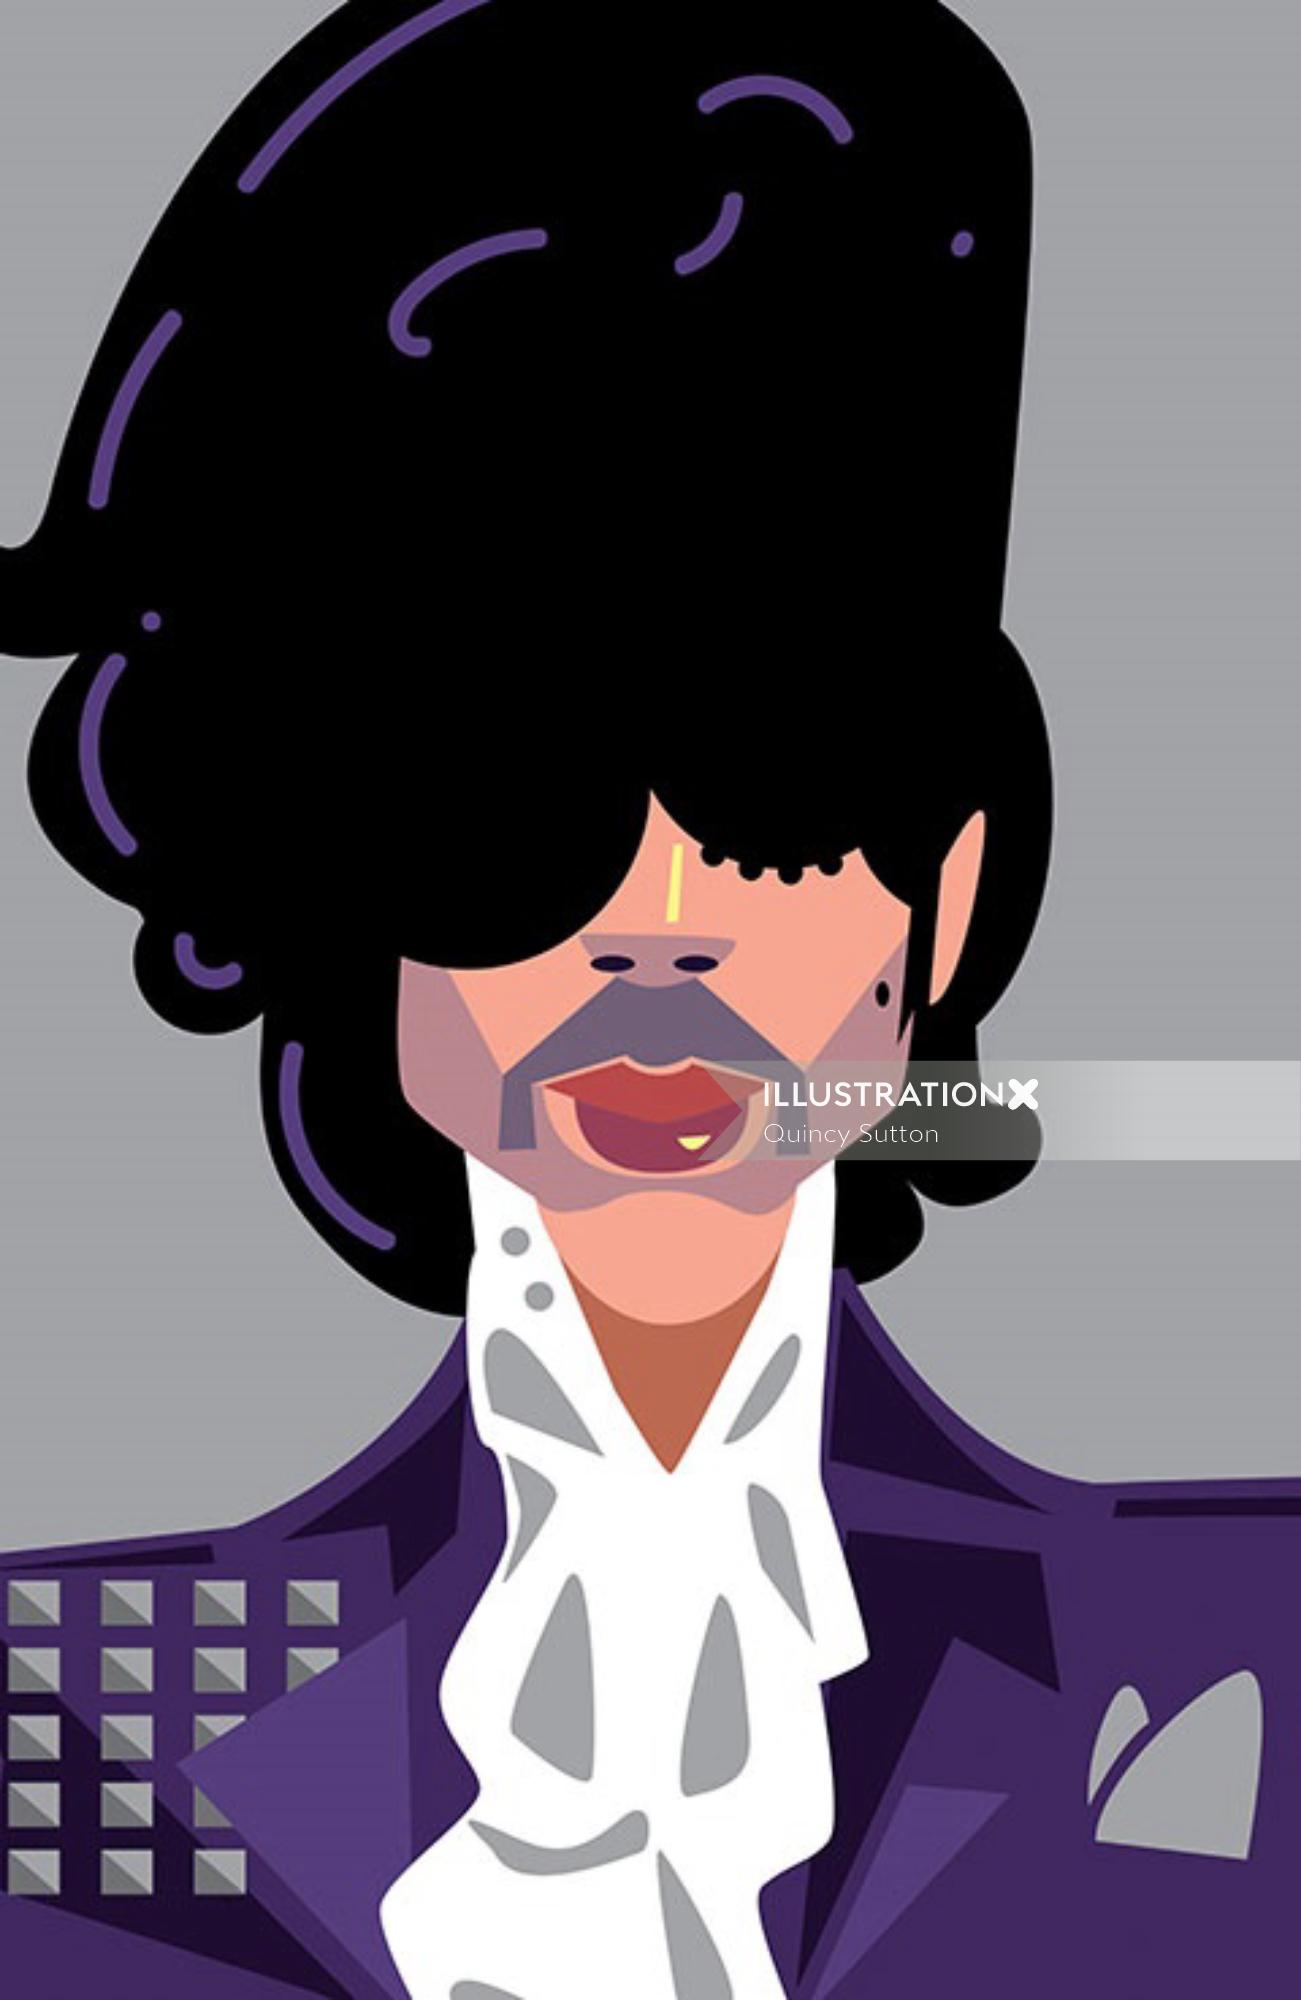 Retrato vetorial do cantor americano Prince